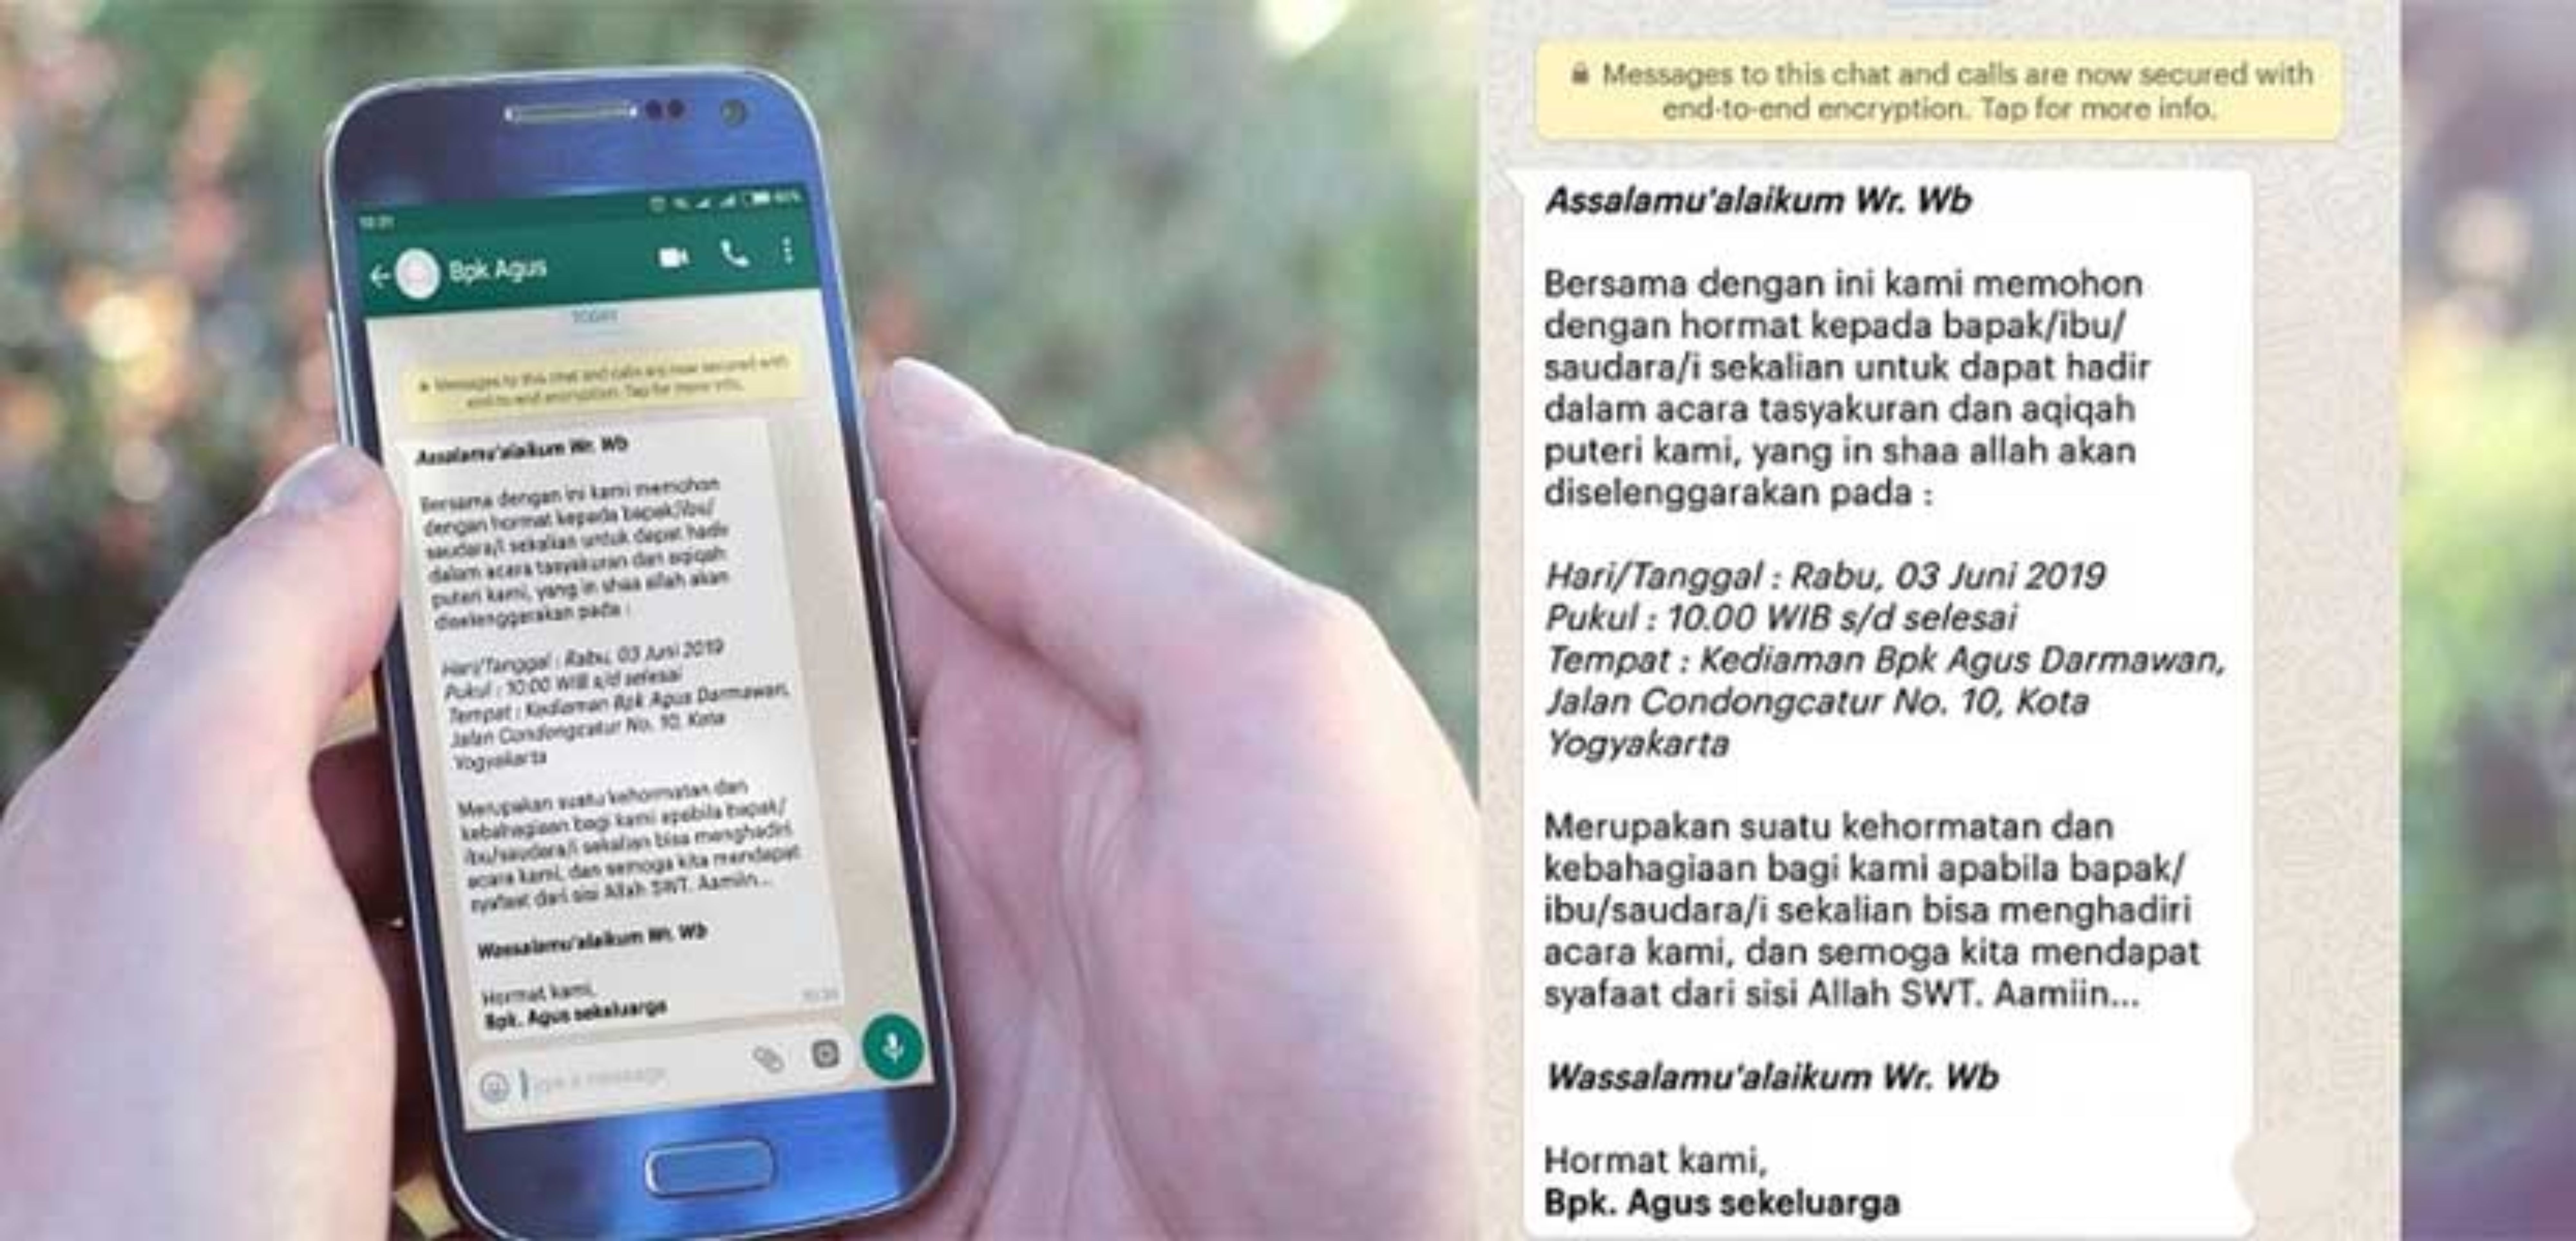 Undangan Rapat Cepat dan Mudah Langsung dari WhatsApp Anda: Panduan Langkah demi Langkah